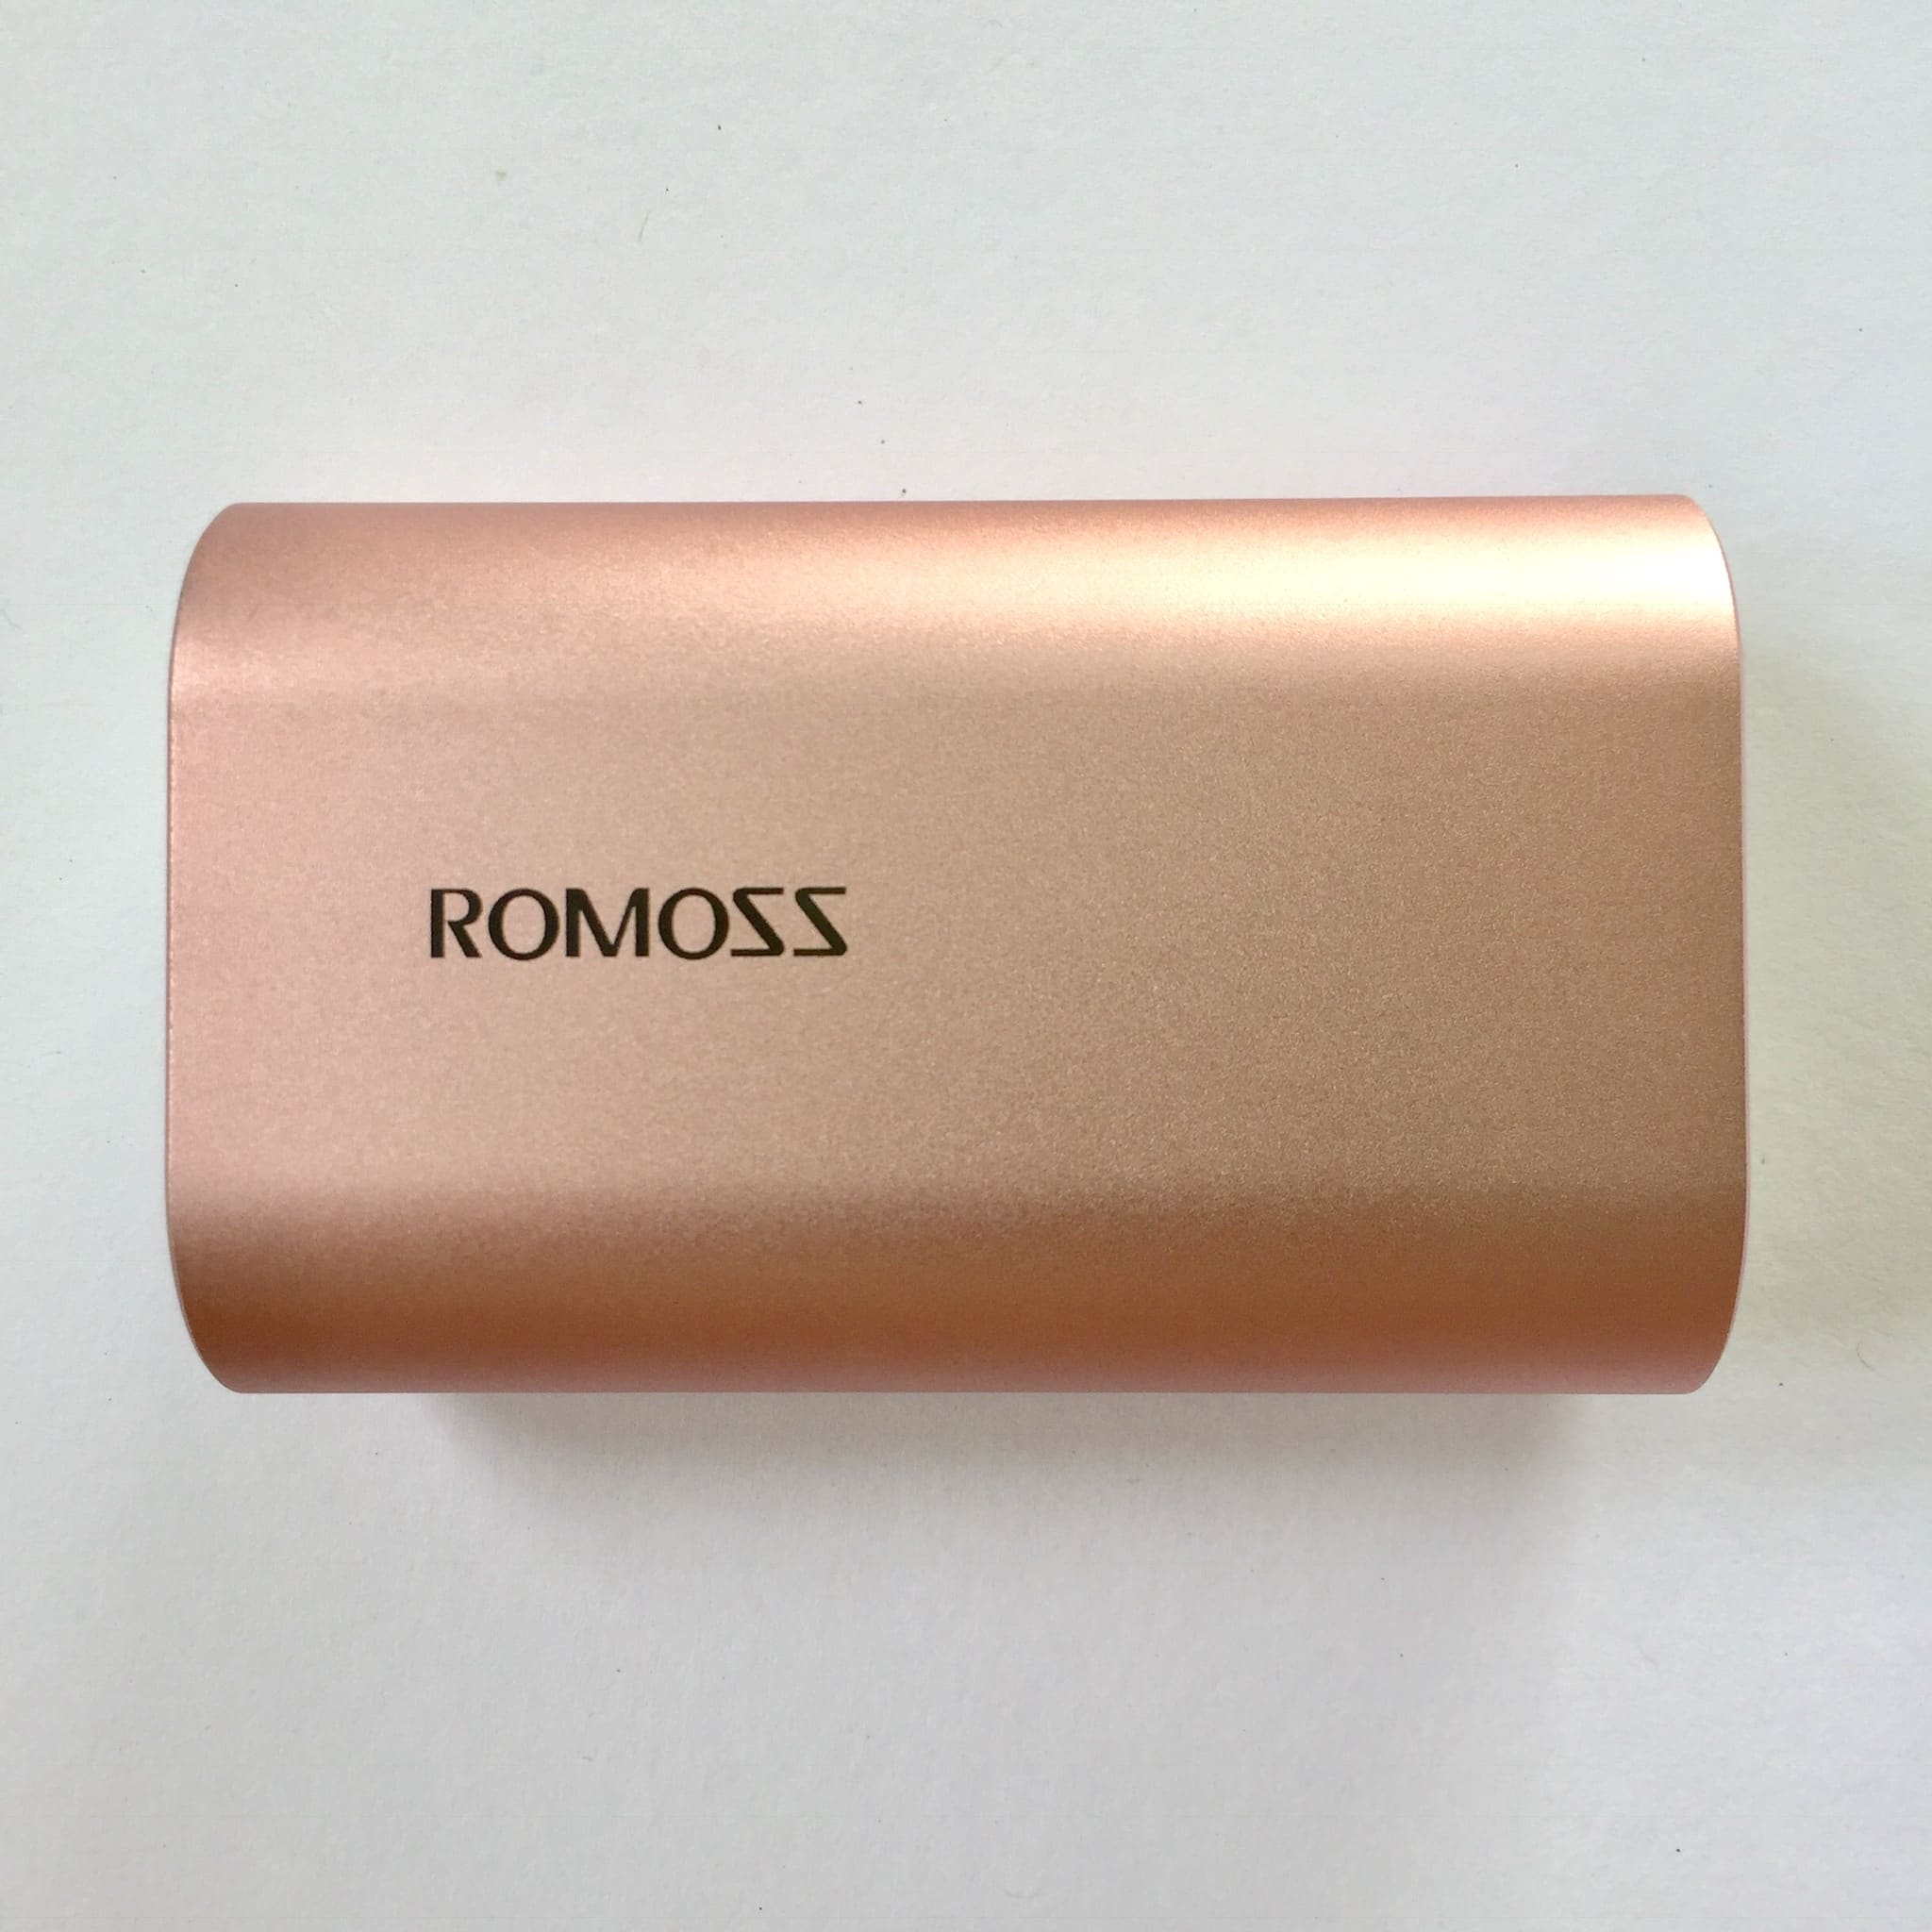 Romoss A10 Powerbank Review